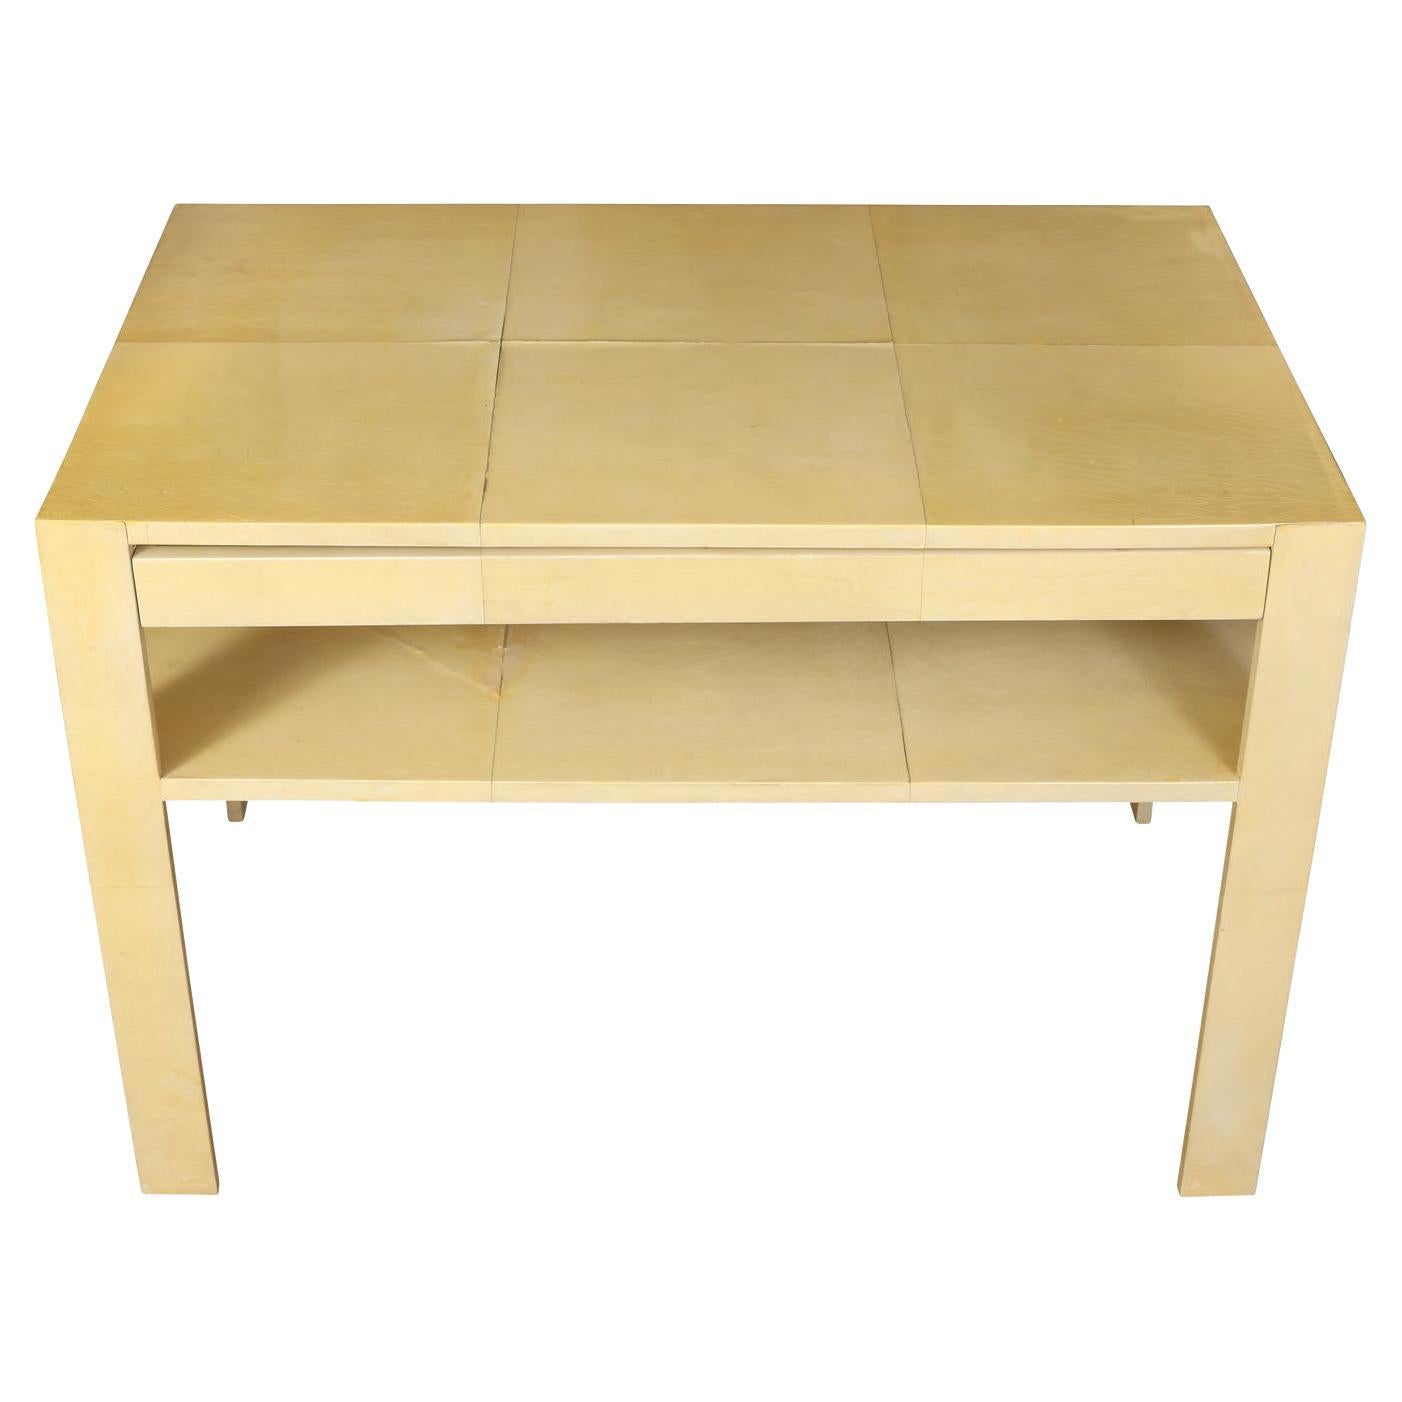 Karl Springer Style Goatskin Side Table with Drawer